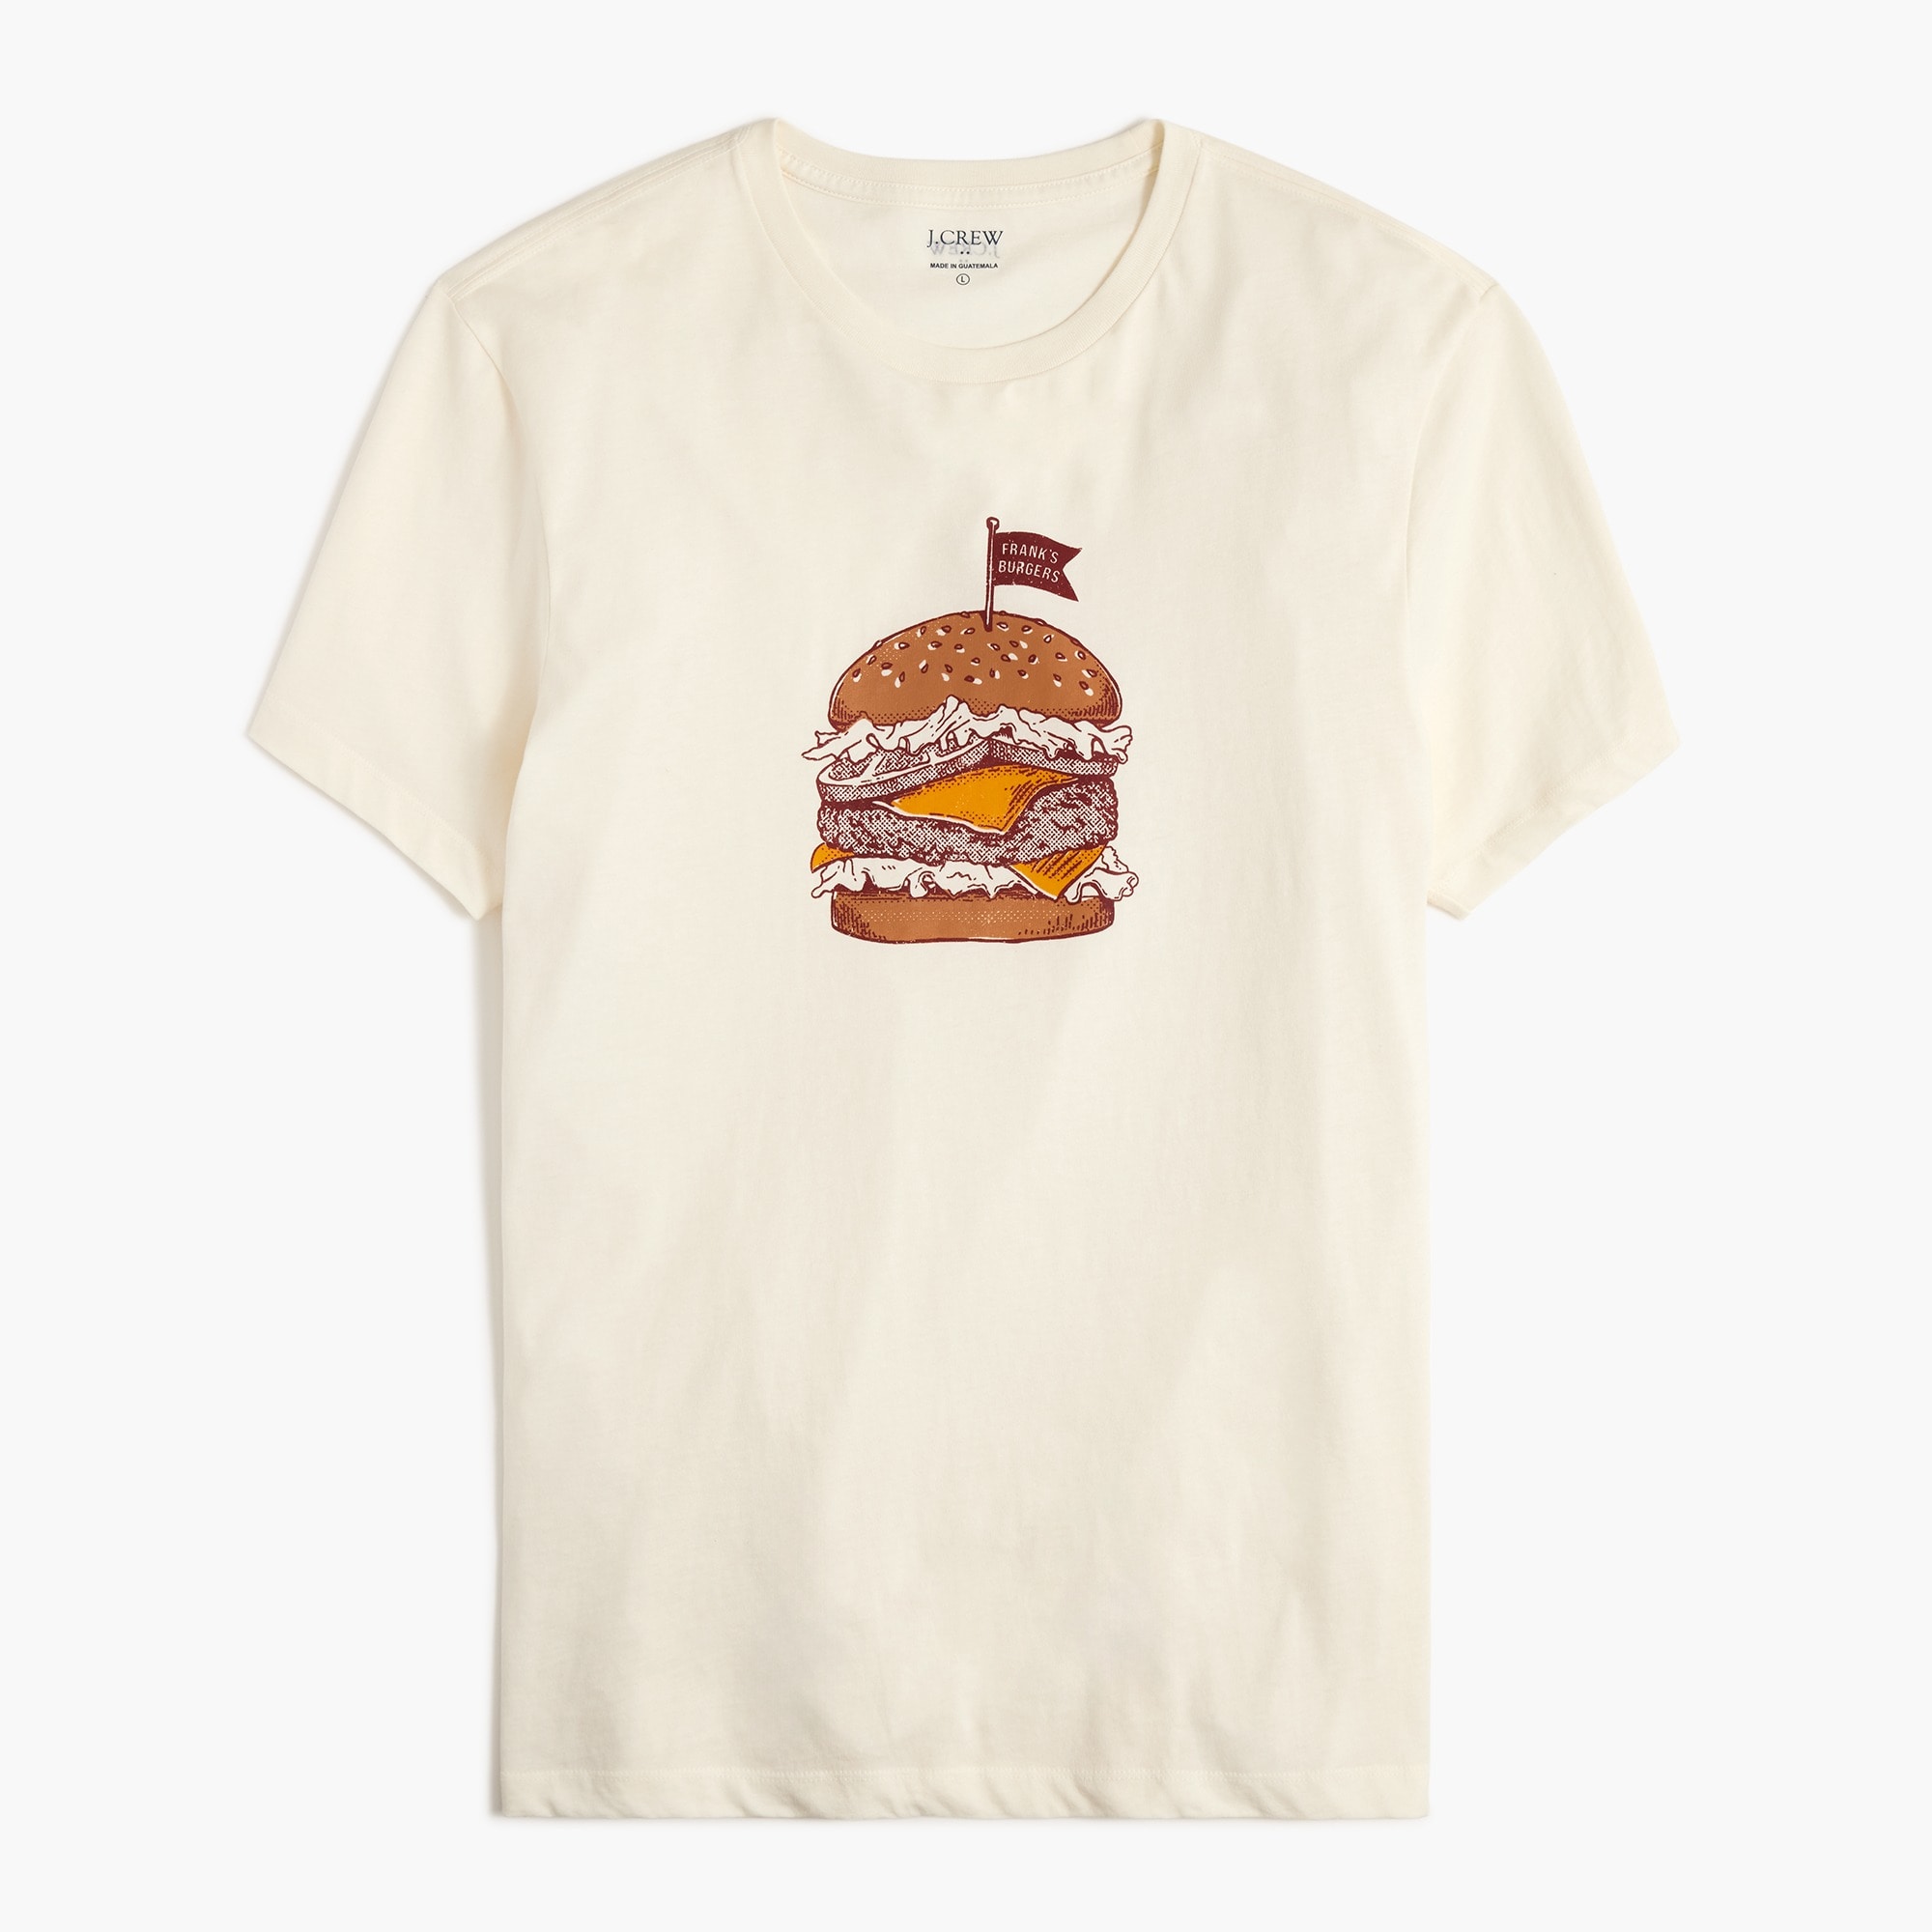 "Frank's burgers" graphic tee